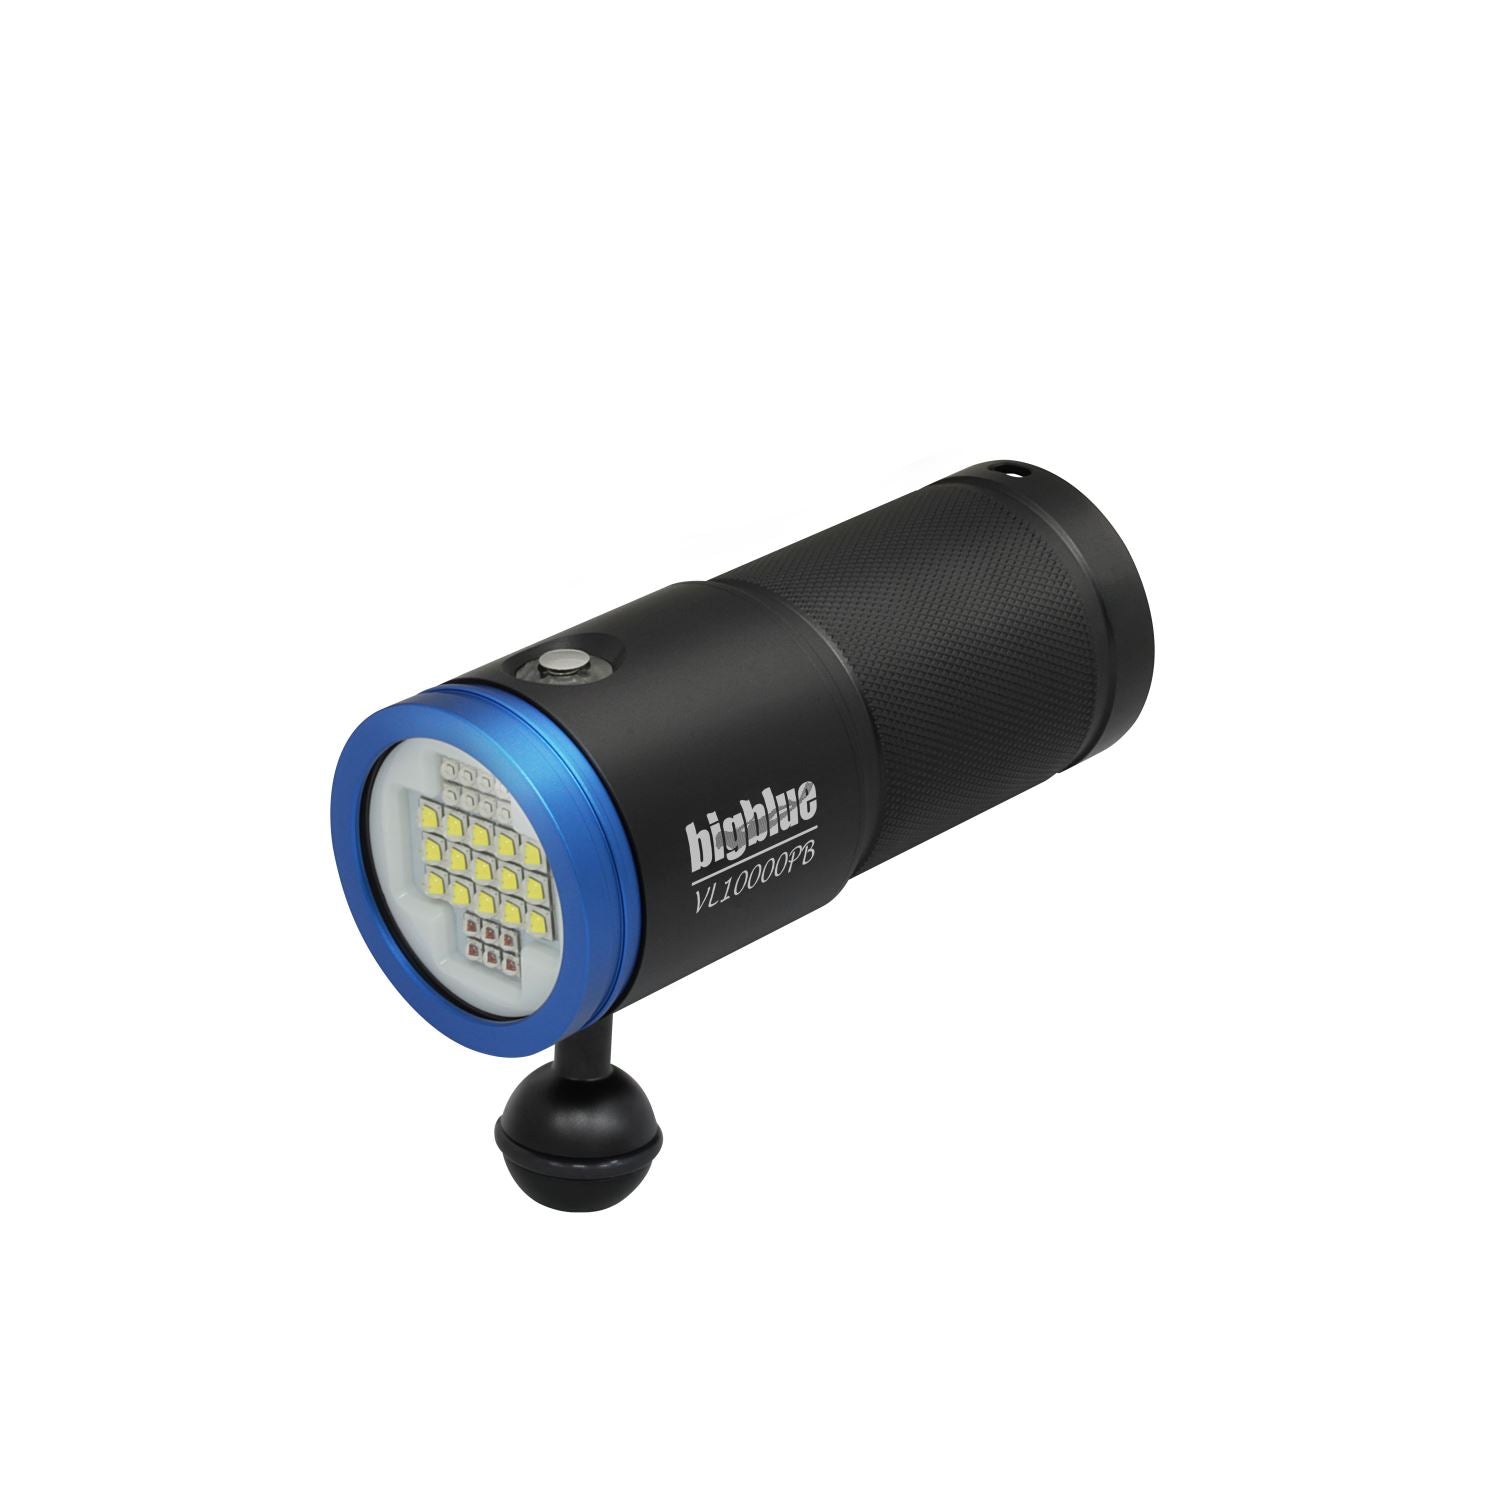 BigBlue 10,000 Lumen Video Light with Blue Mode Plus Remote Control - Black-